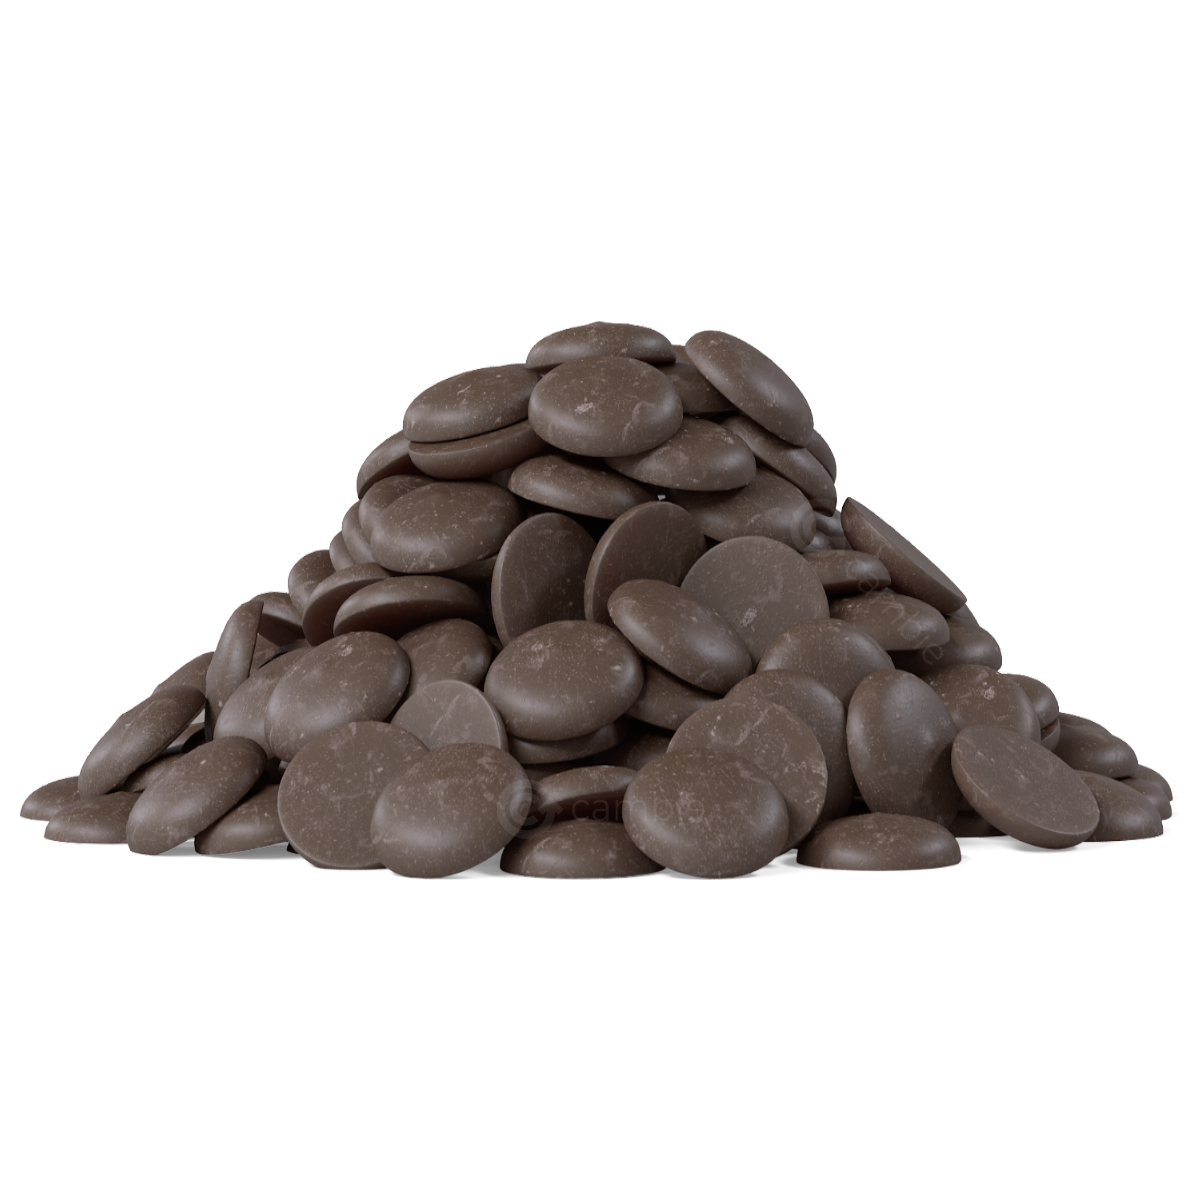 A'Peels Dark Chocolate - 25 lb